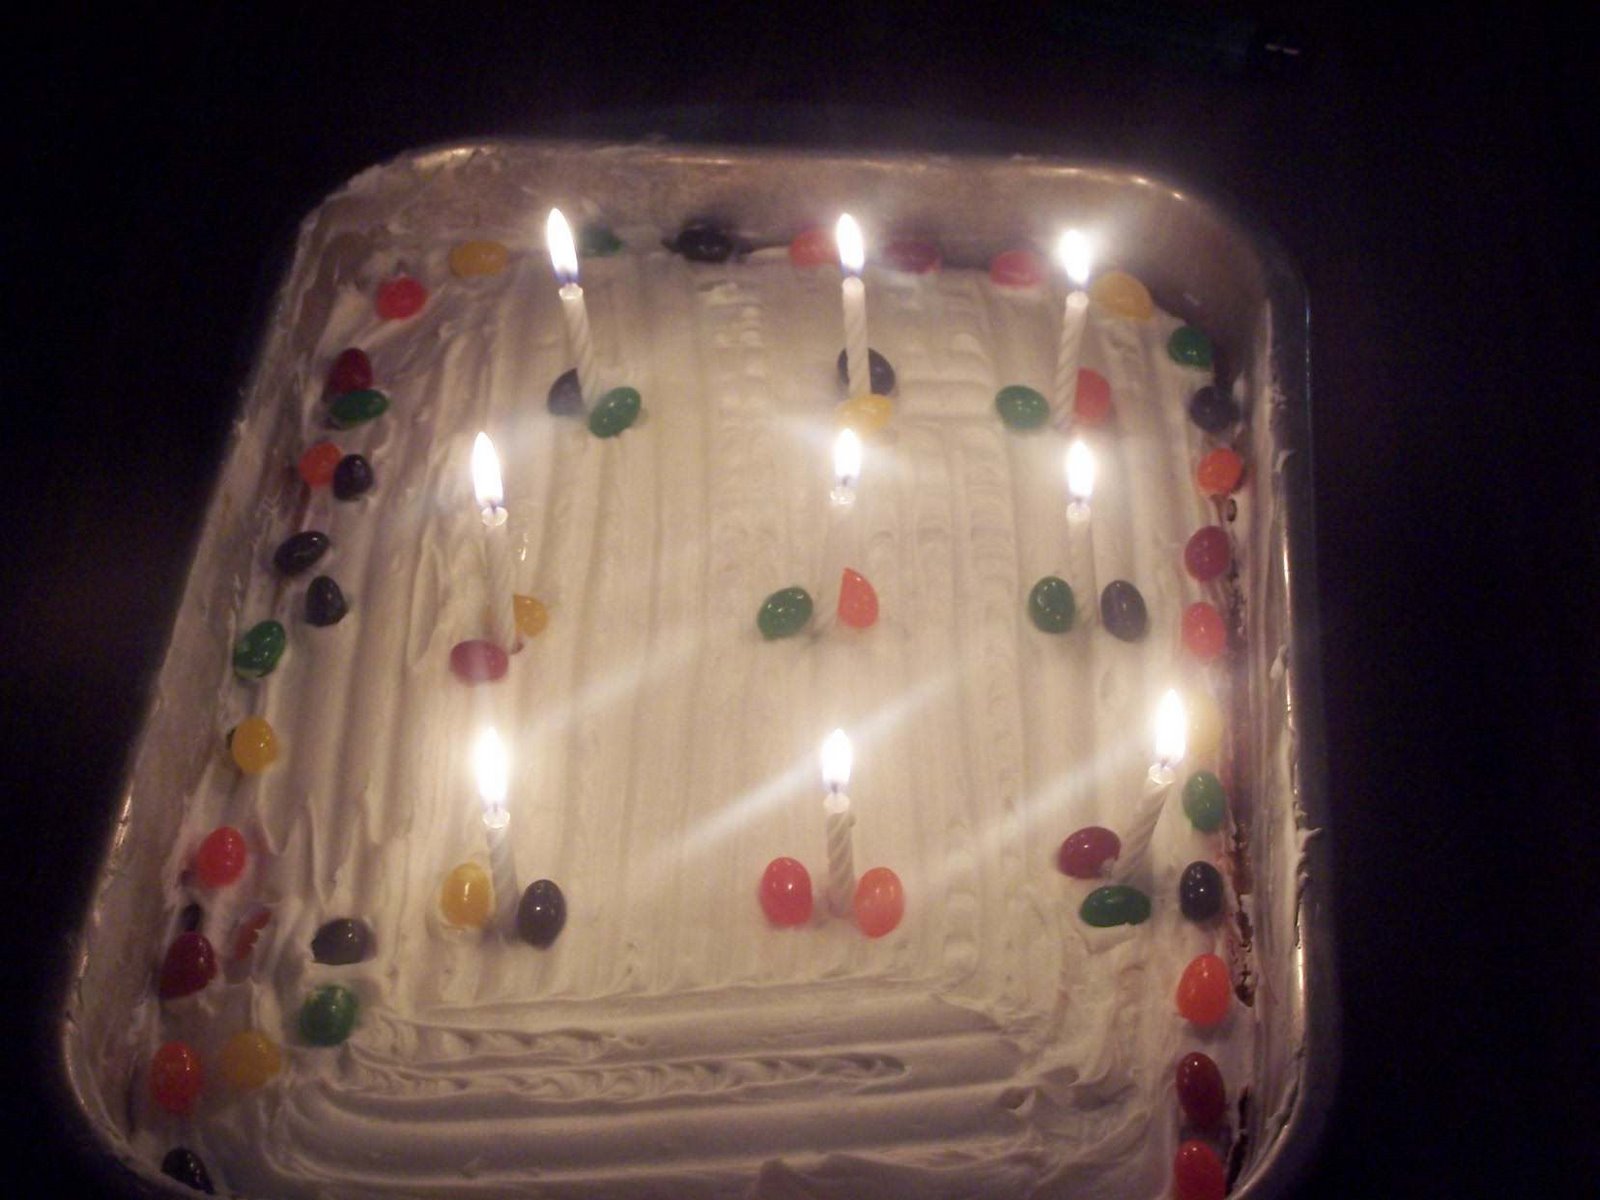 [cake.JPG]